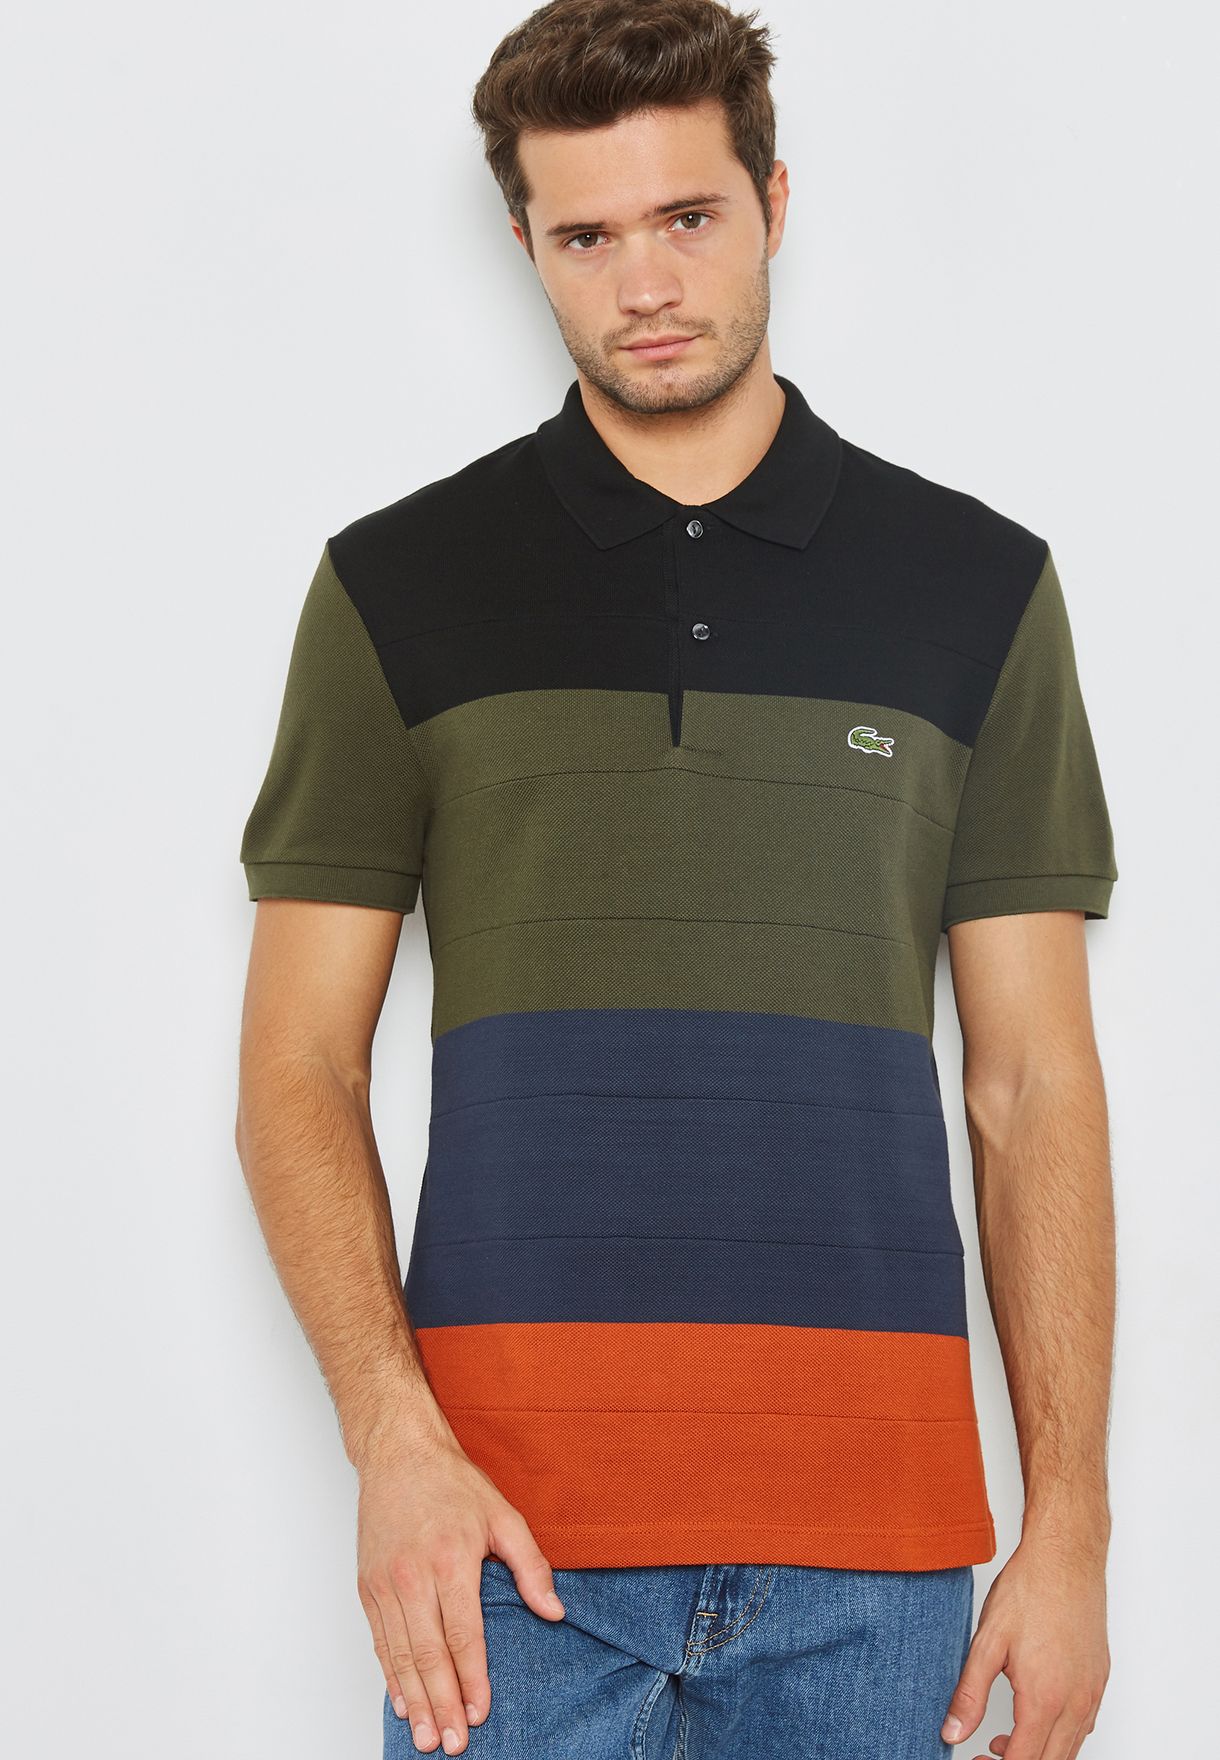 Buy Lacoste multicolor Striped Polo for 